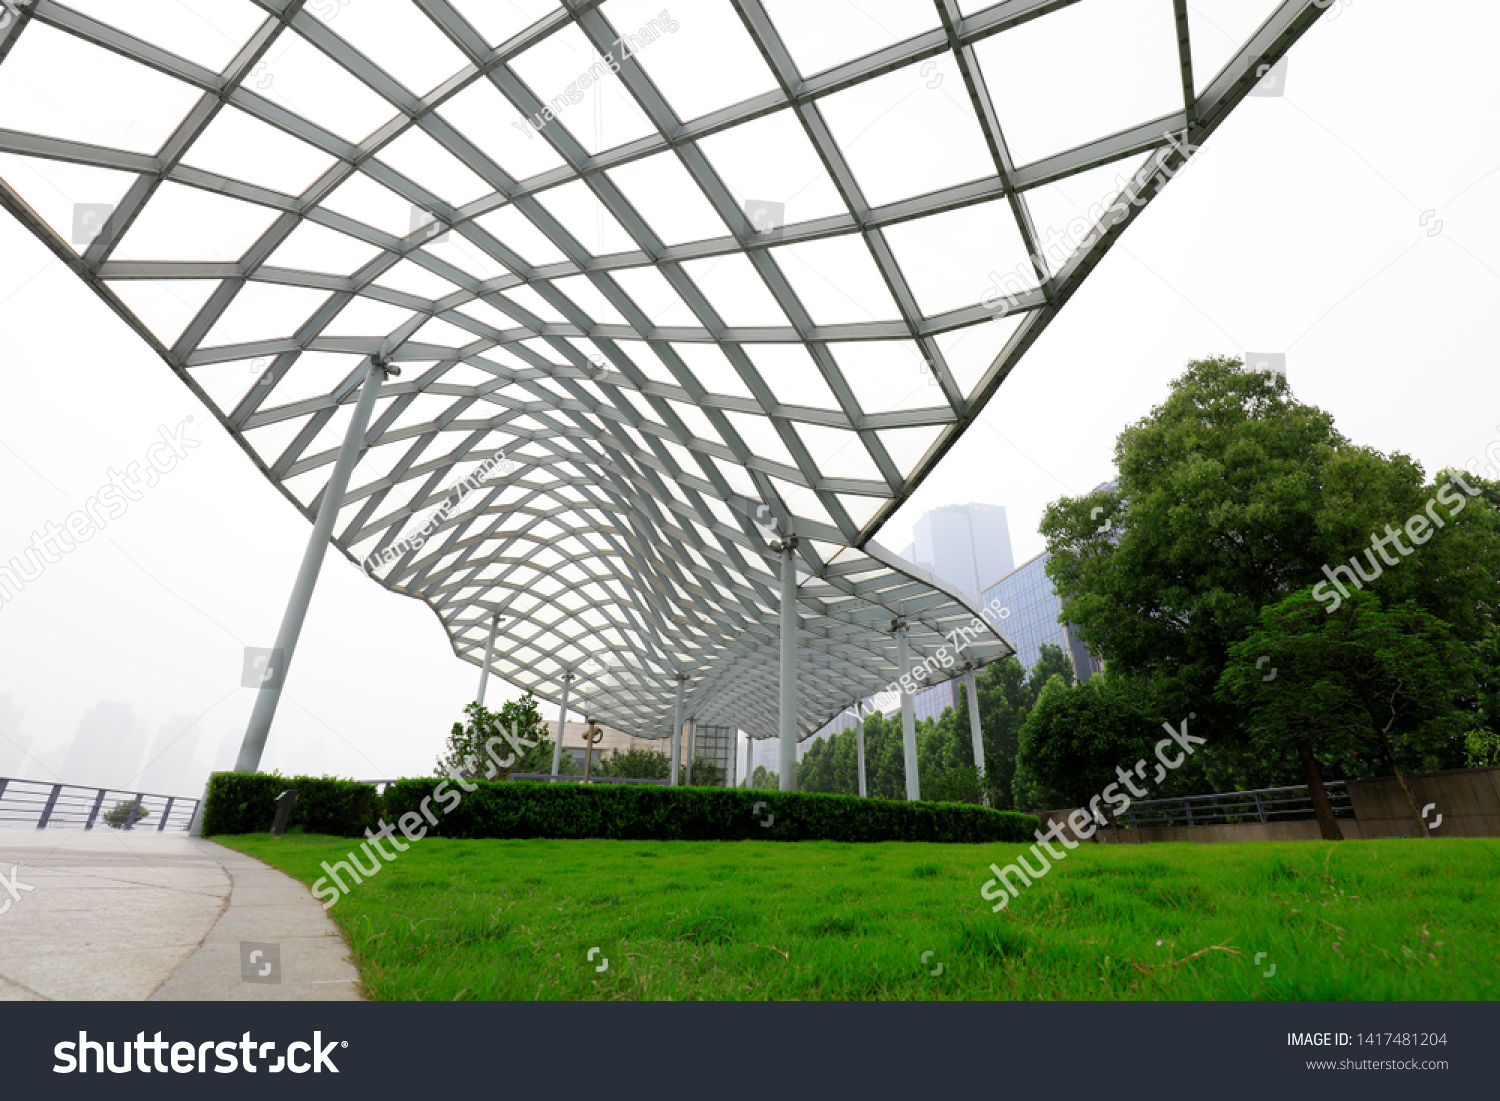 Deformed Metal Frame Structures in Parks, Shanghai, China #1417481204